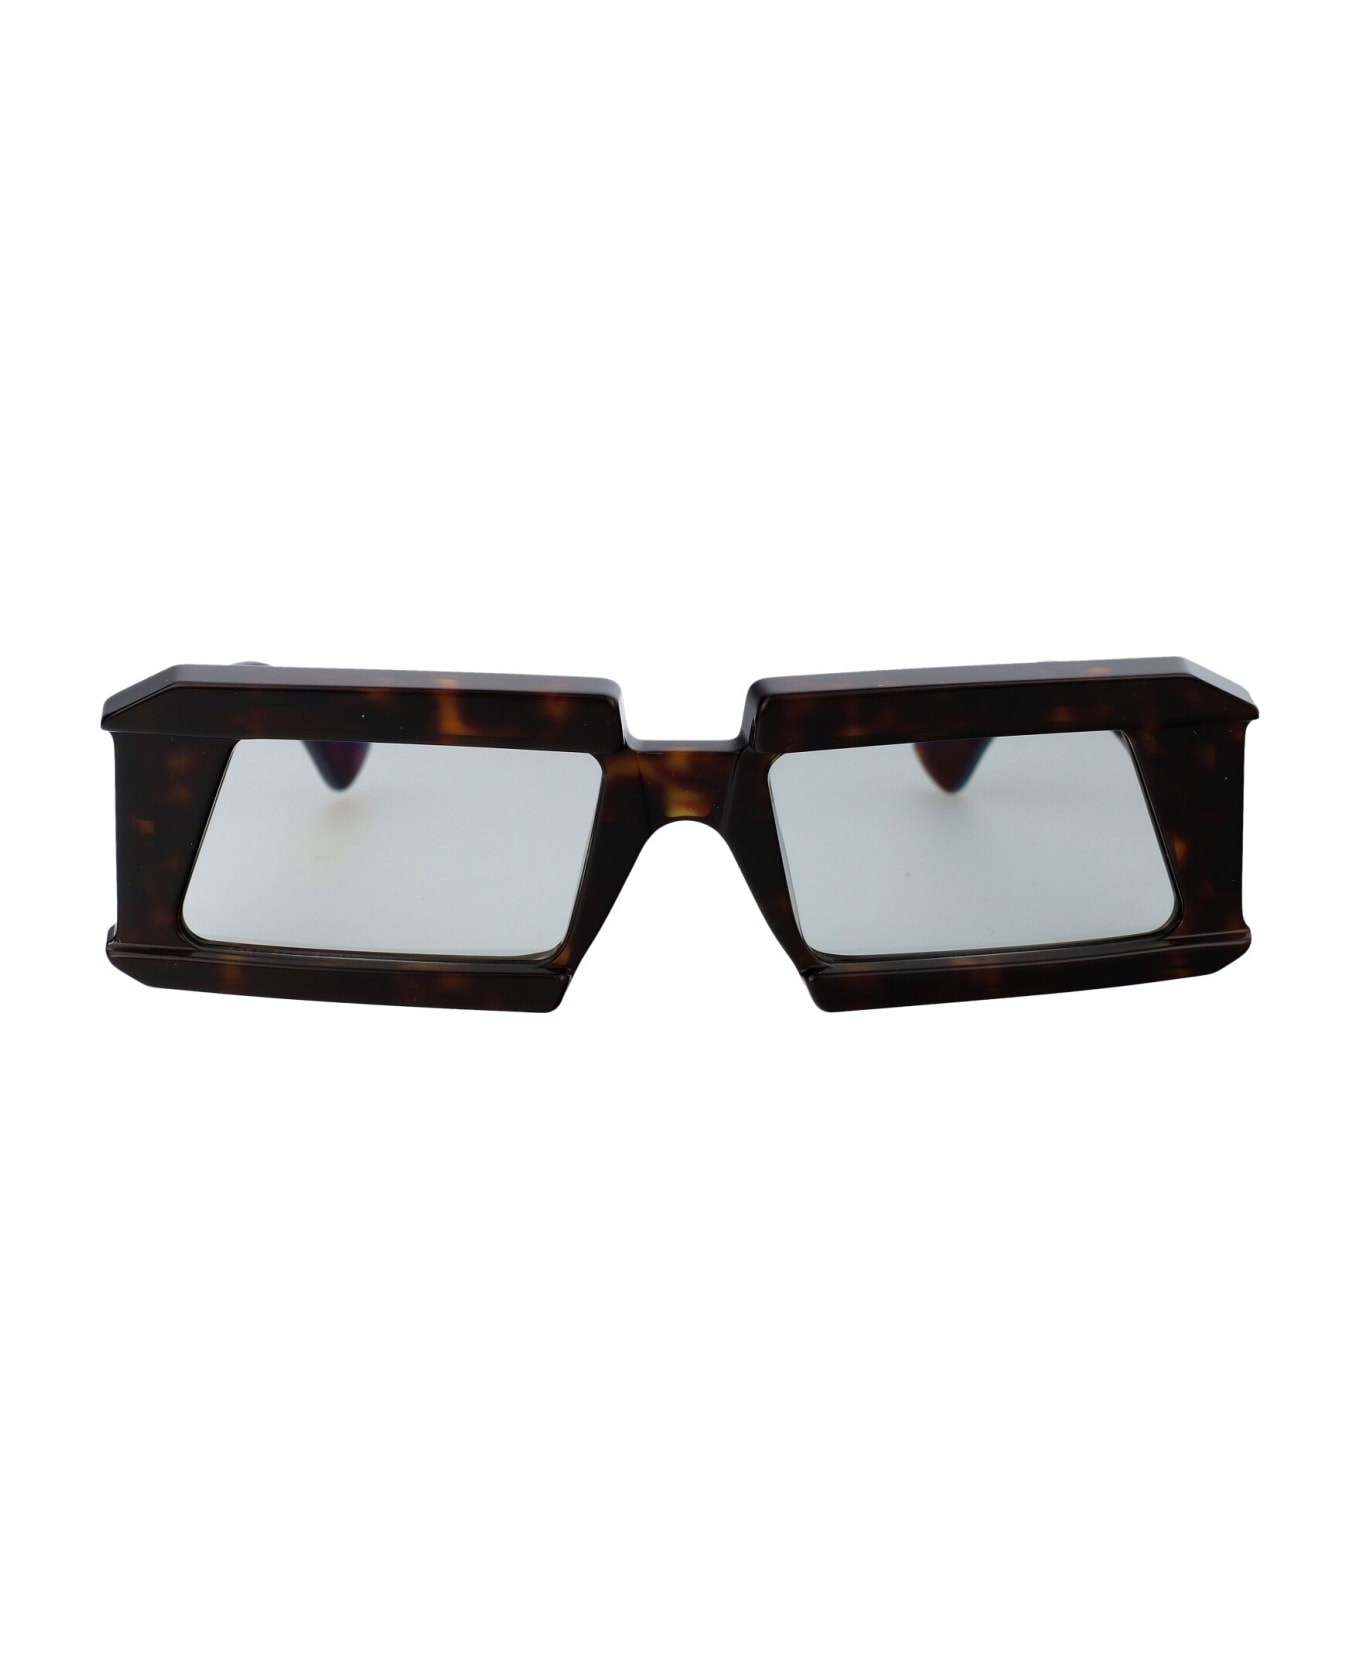 Kuboraum Maske X20 Sunglasses - TS CT 2grey1*